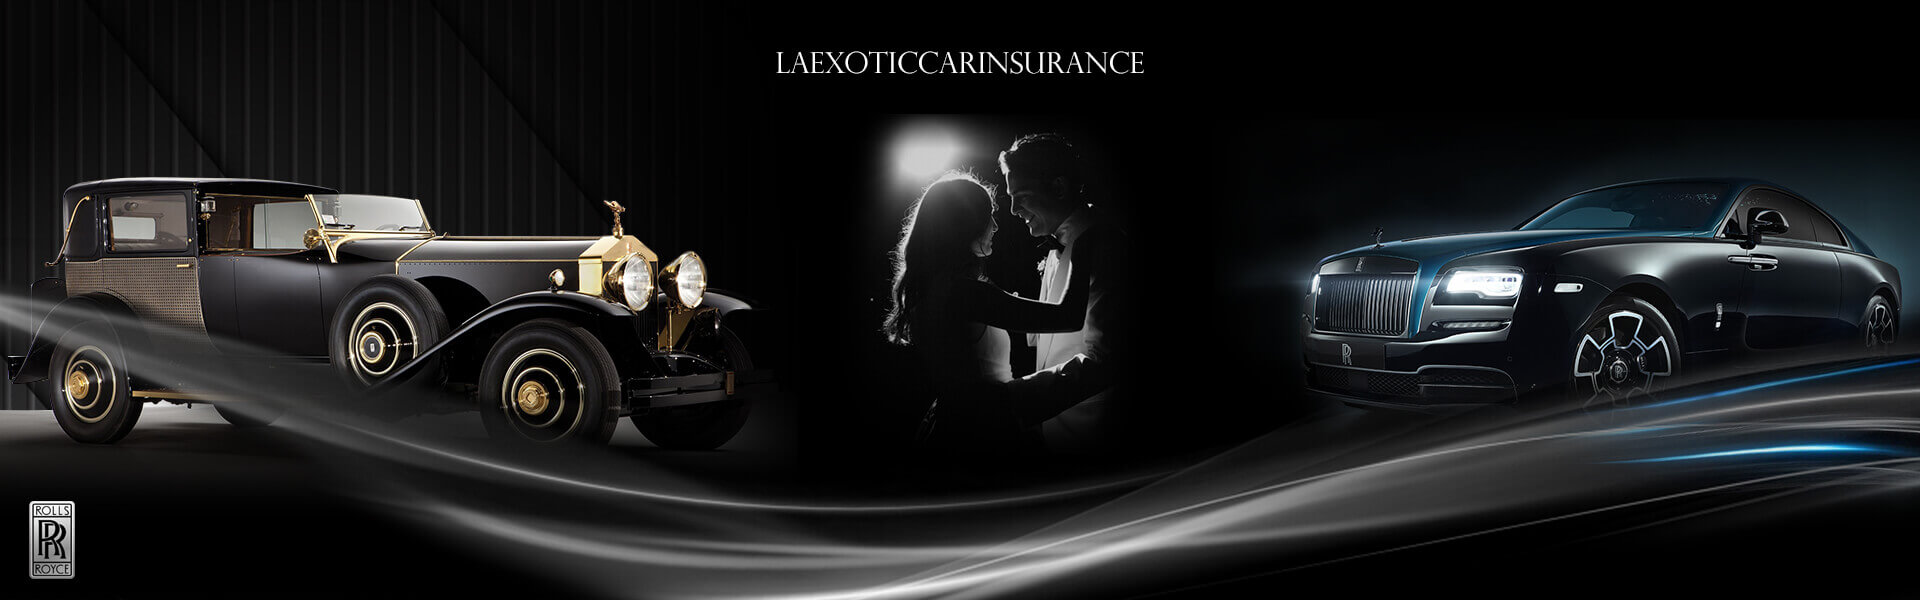 Homepage - LA Exotic Auto Insurance. Exotic car insurance and classic car insurance specialists.